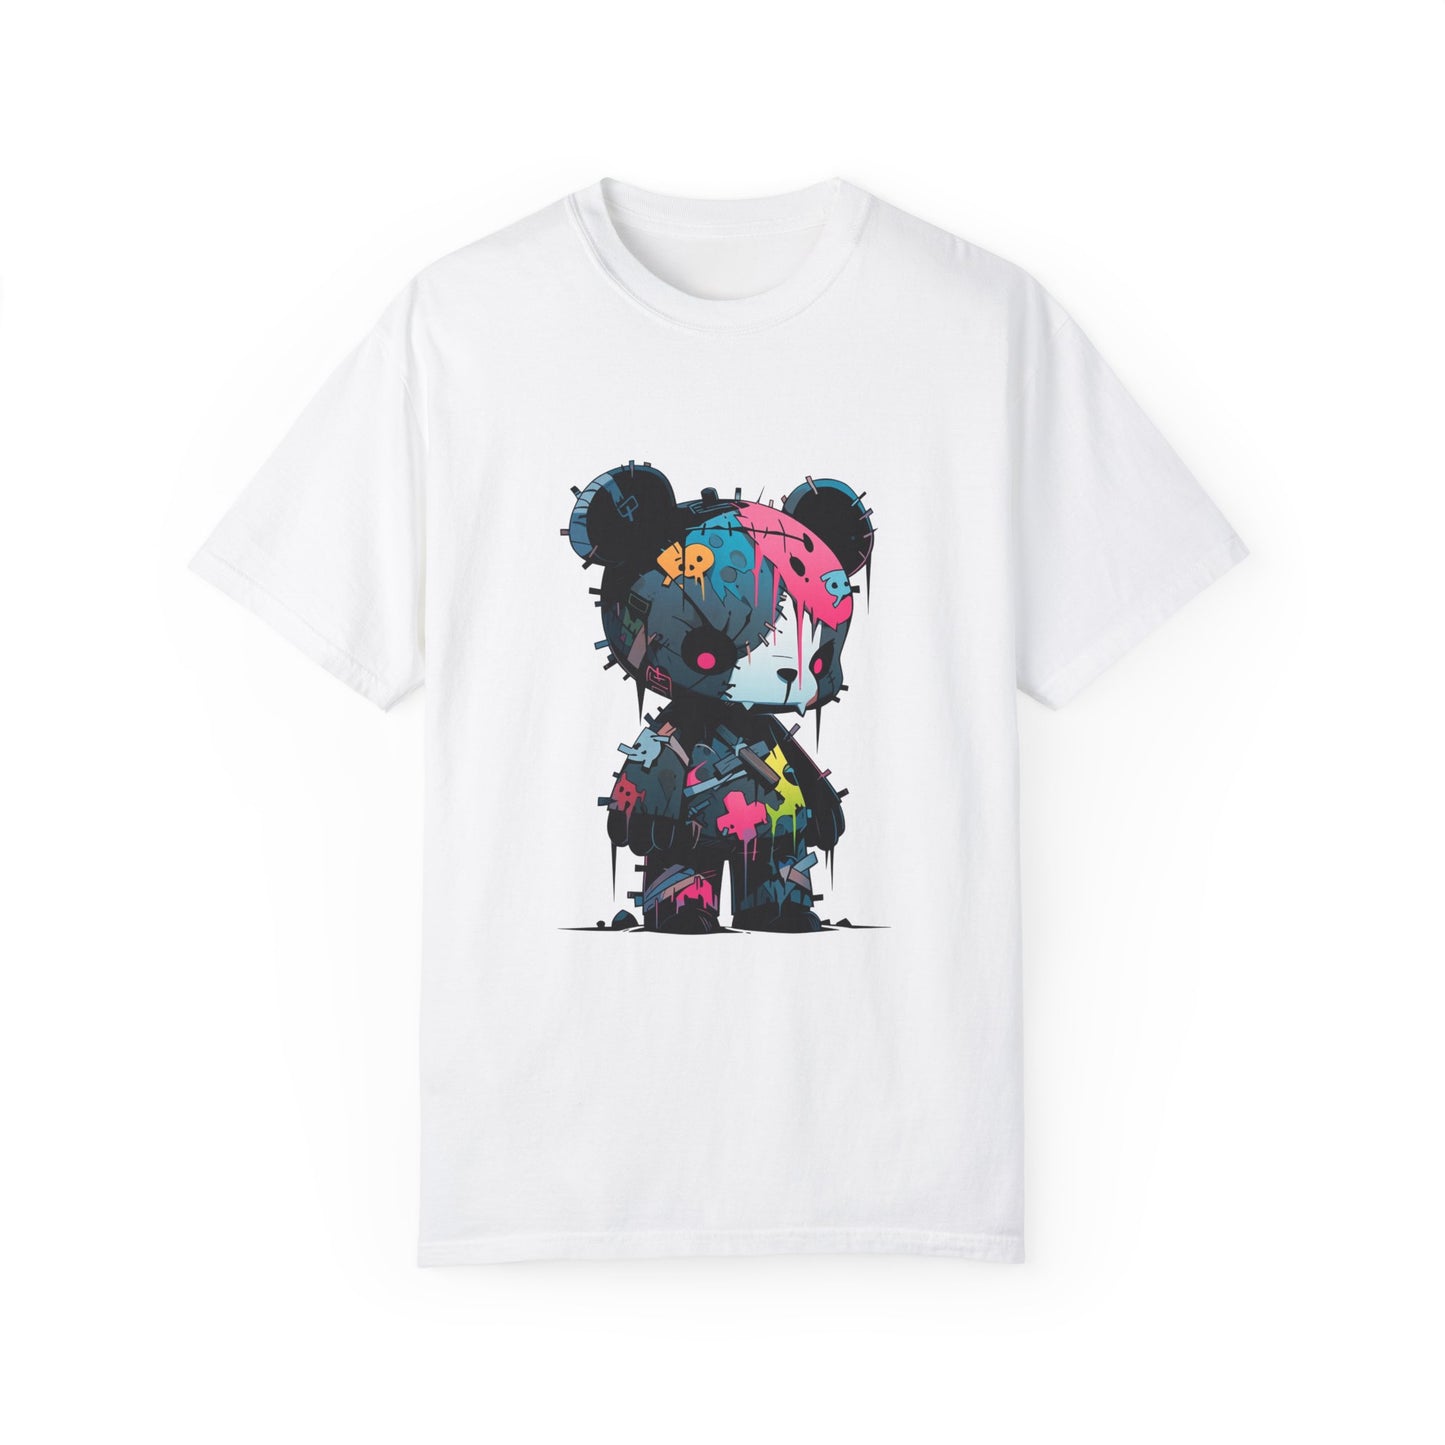 Hip Hop Teddy Bear Graphic Unisex Garment-dyed T-shirt Cotton Funny Humorous Graphic Soft Premium Unisex Men Women White T-shirt Birthday Gift-1